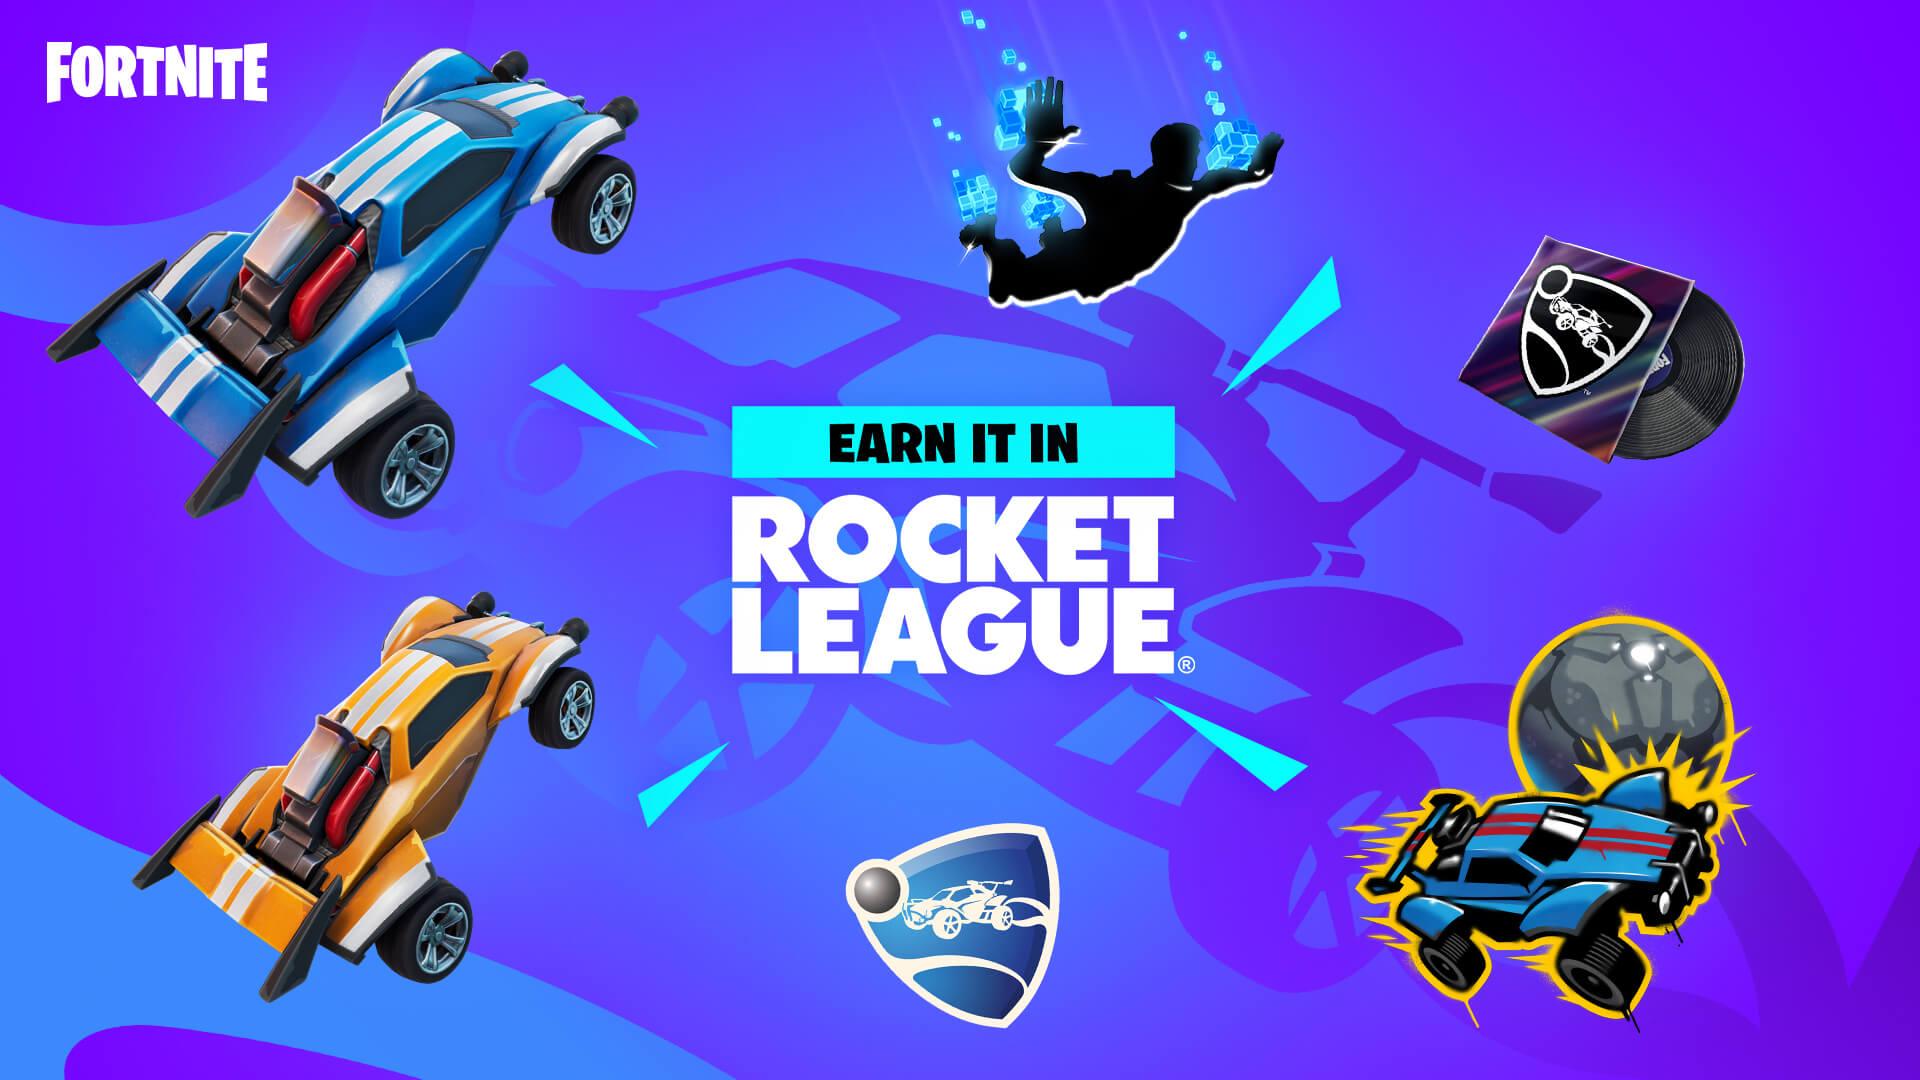 Epic Games rewards for fortnite x rocket league event